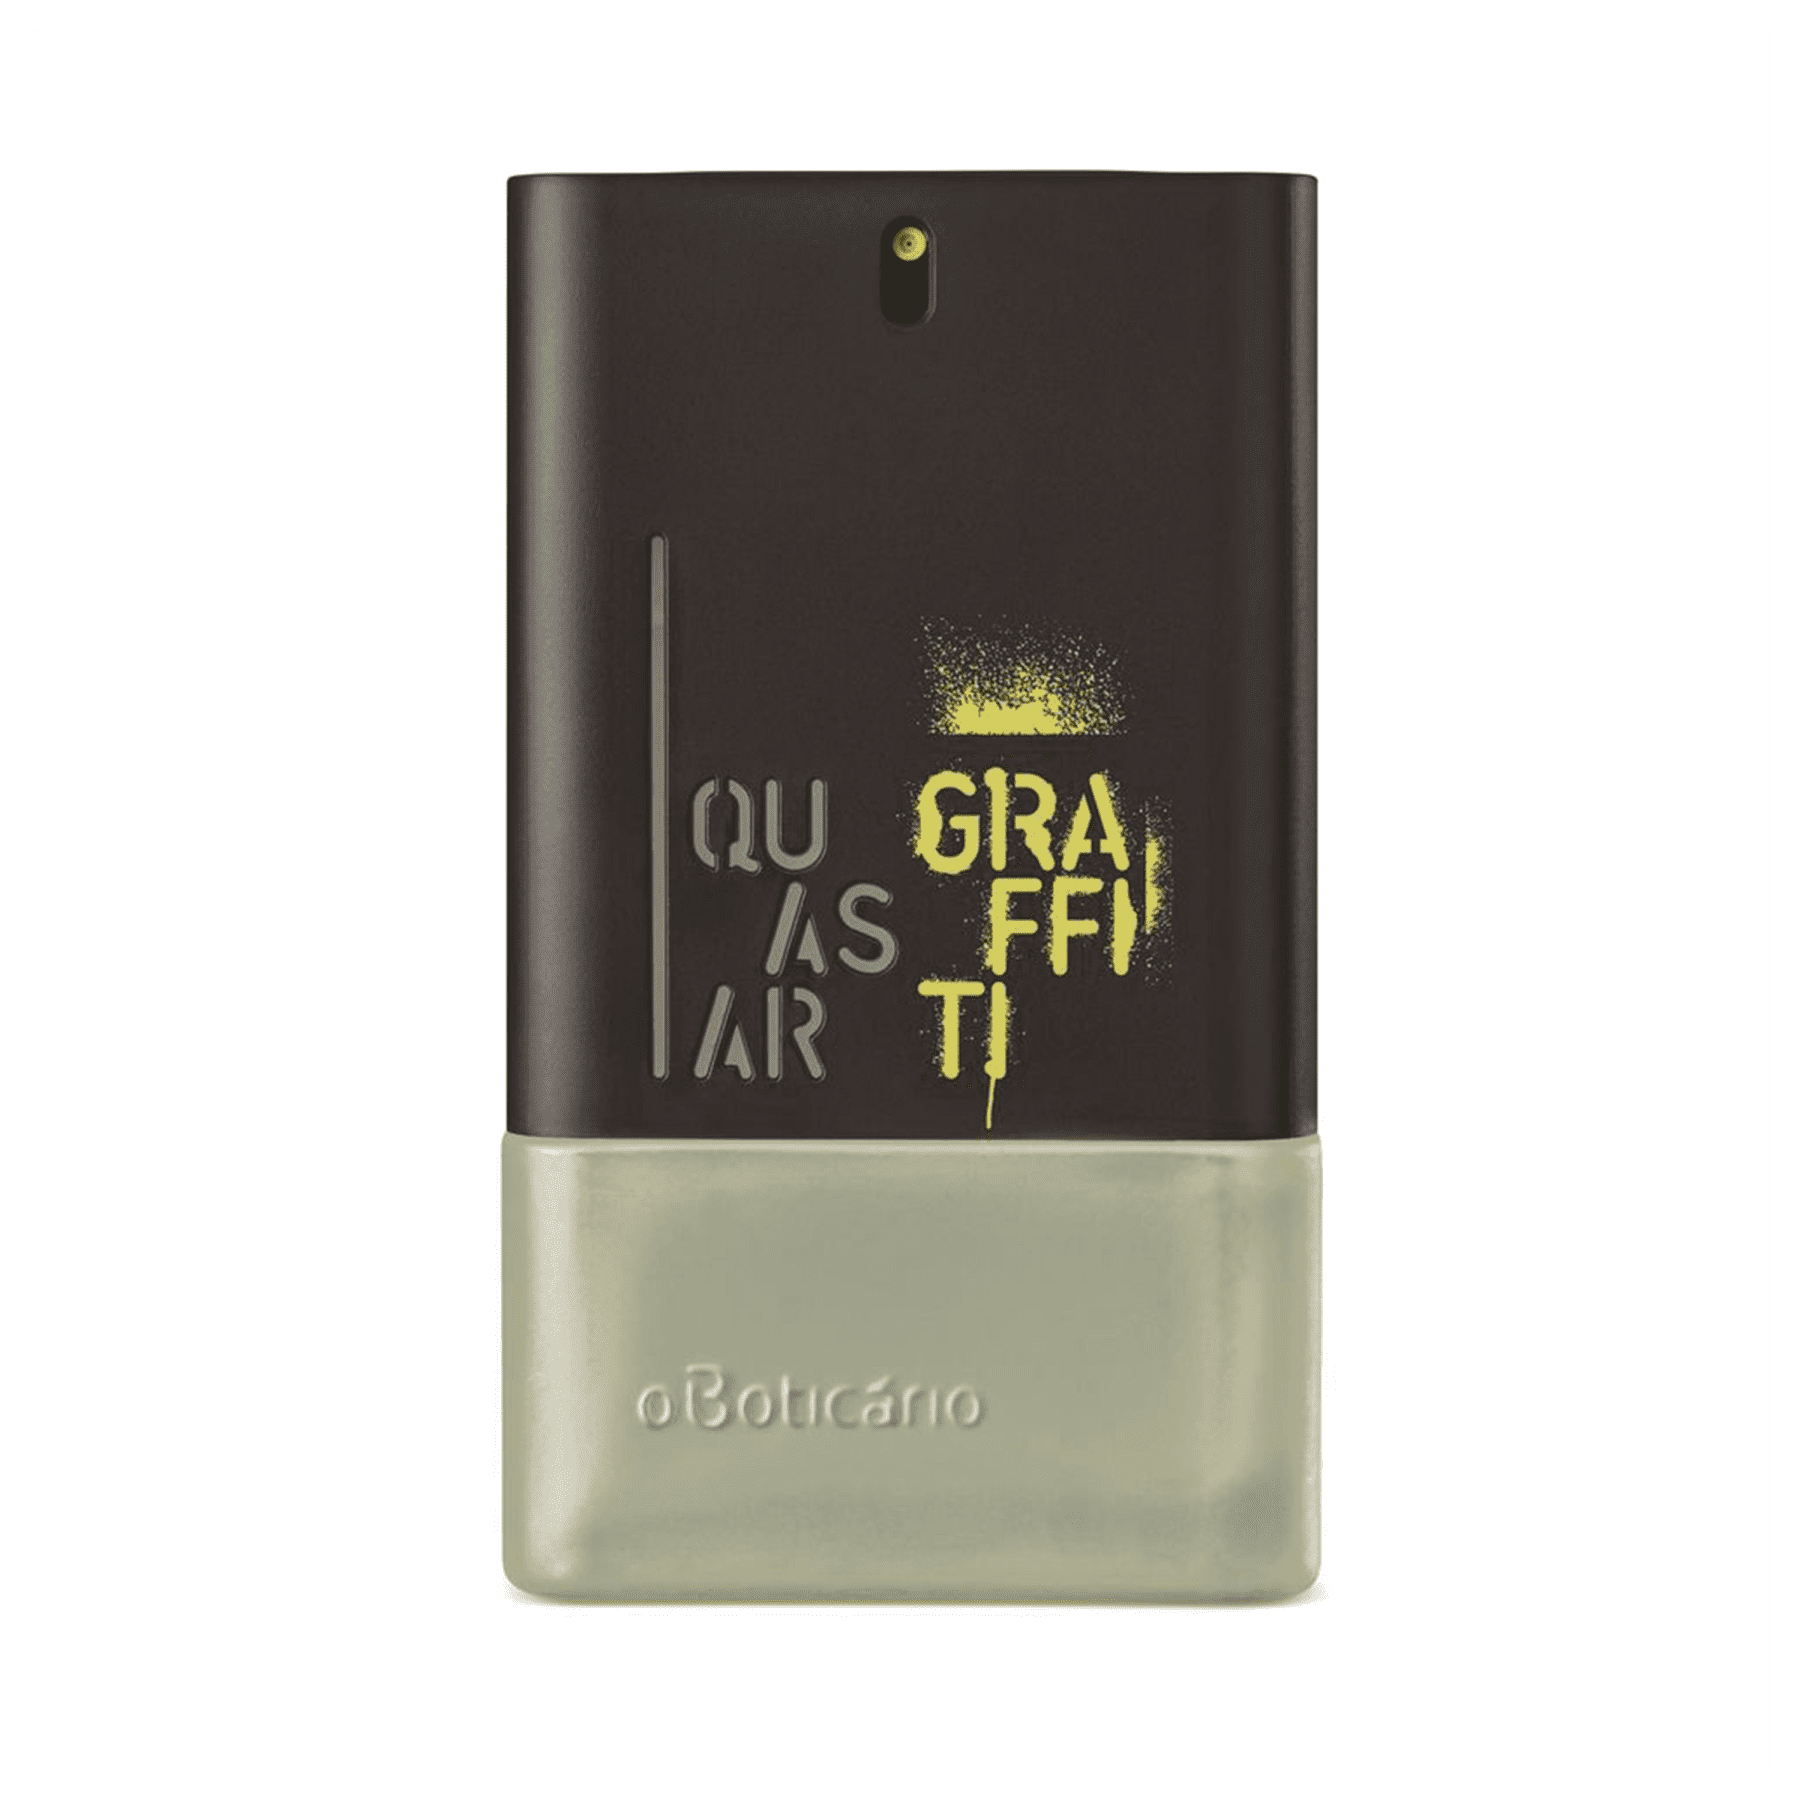 Quasar Graffiti Deodorant Cologne 100ml - o Boticario